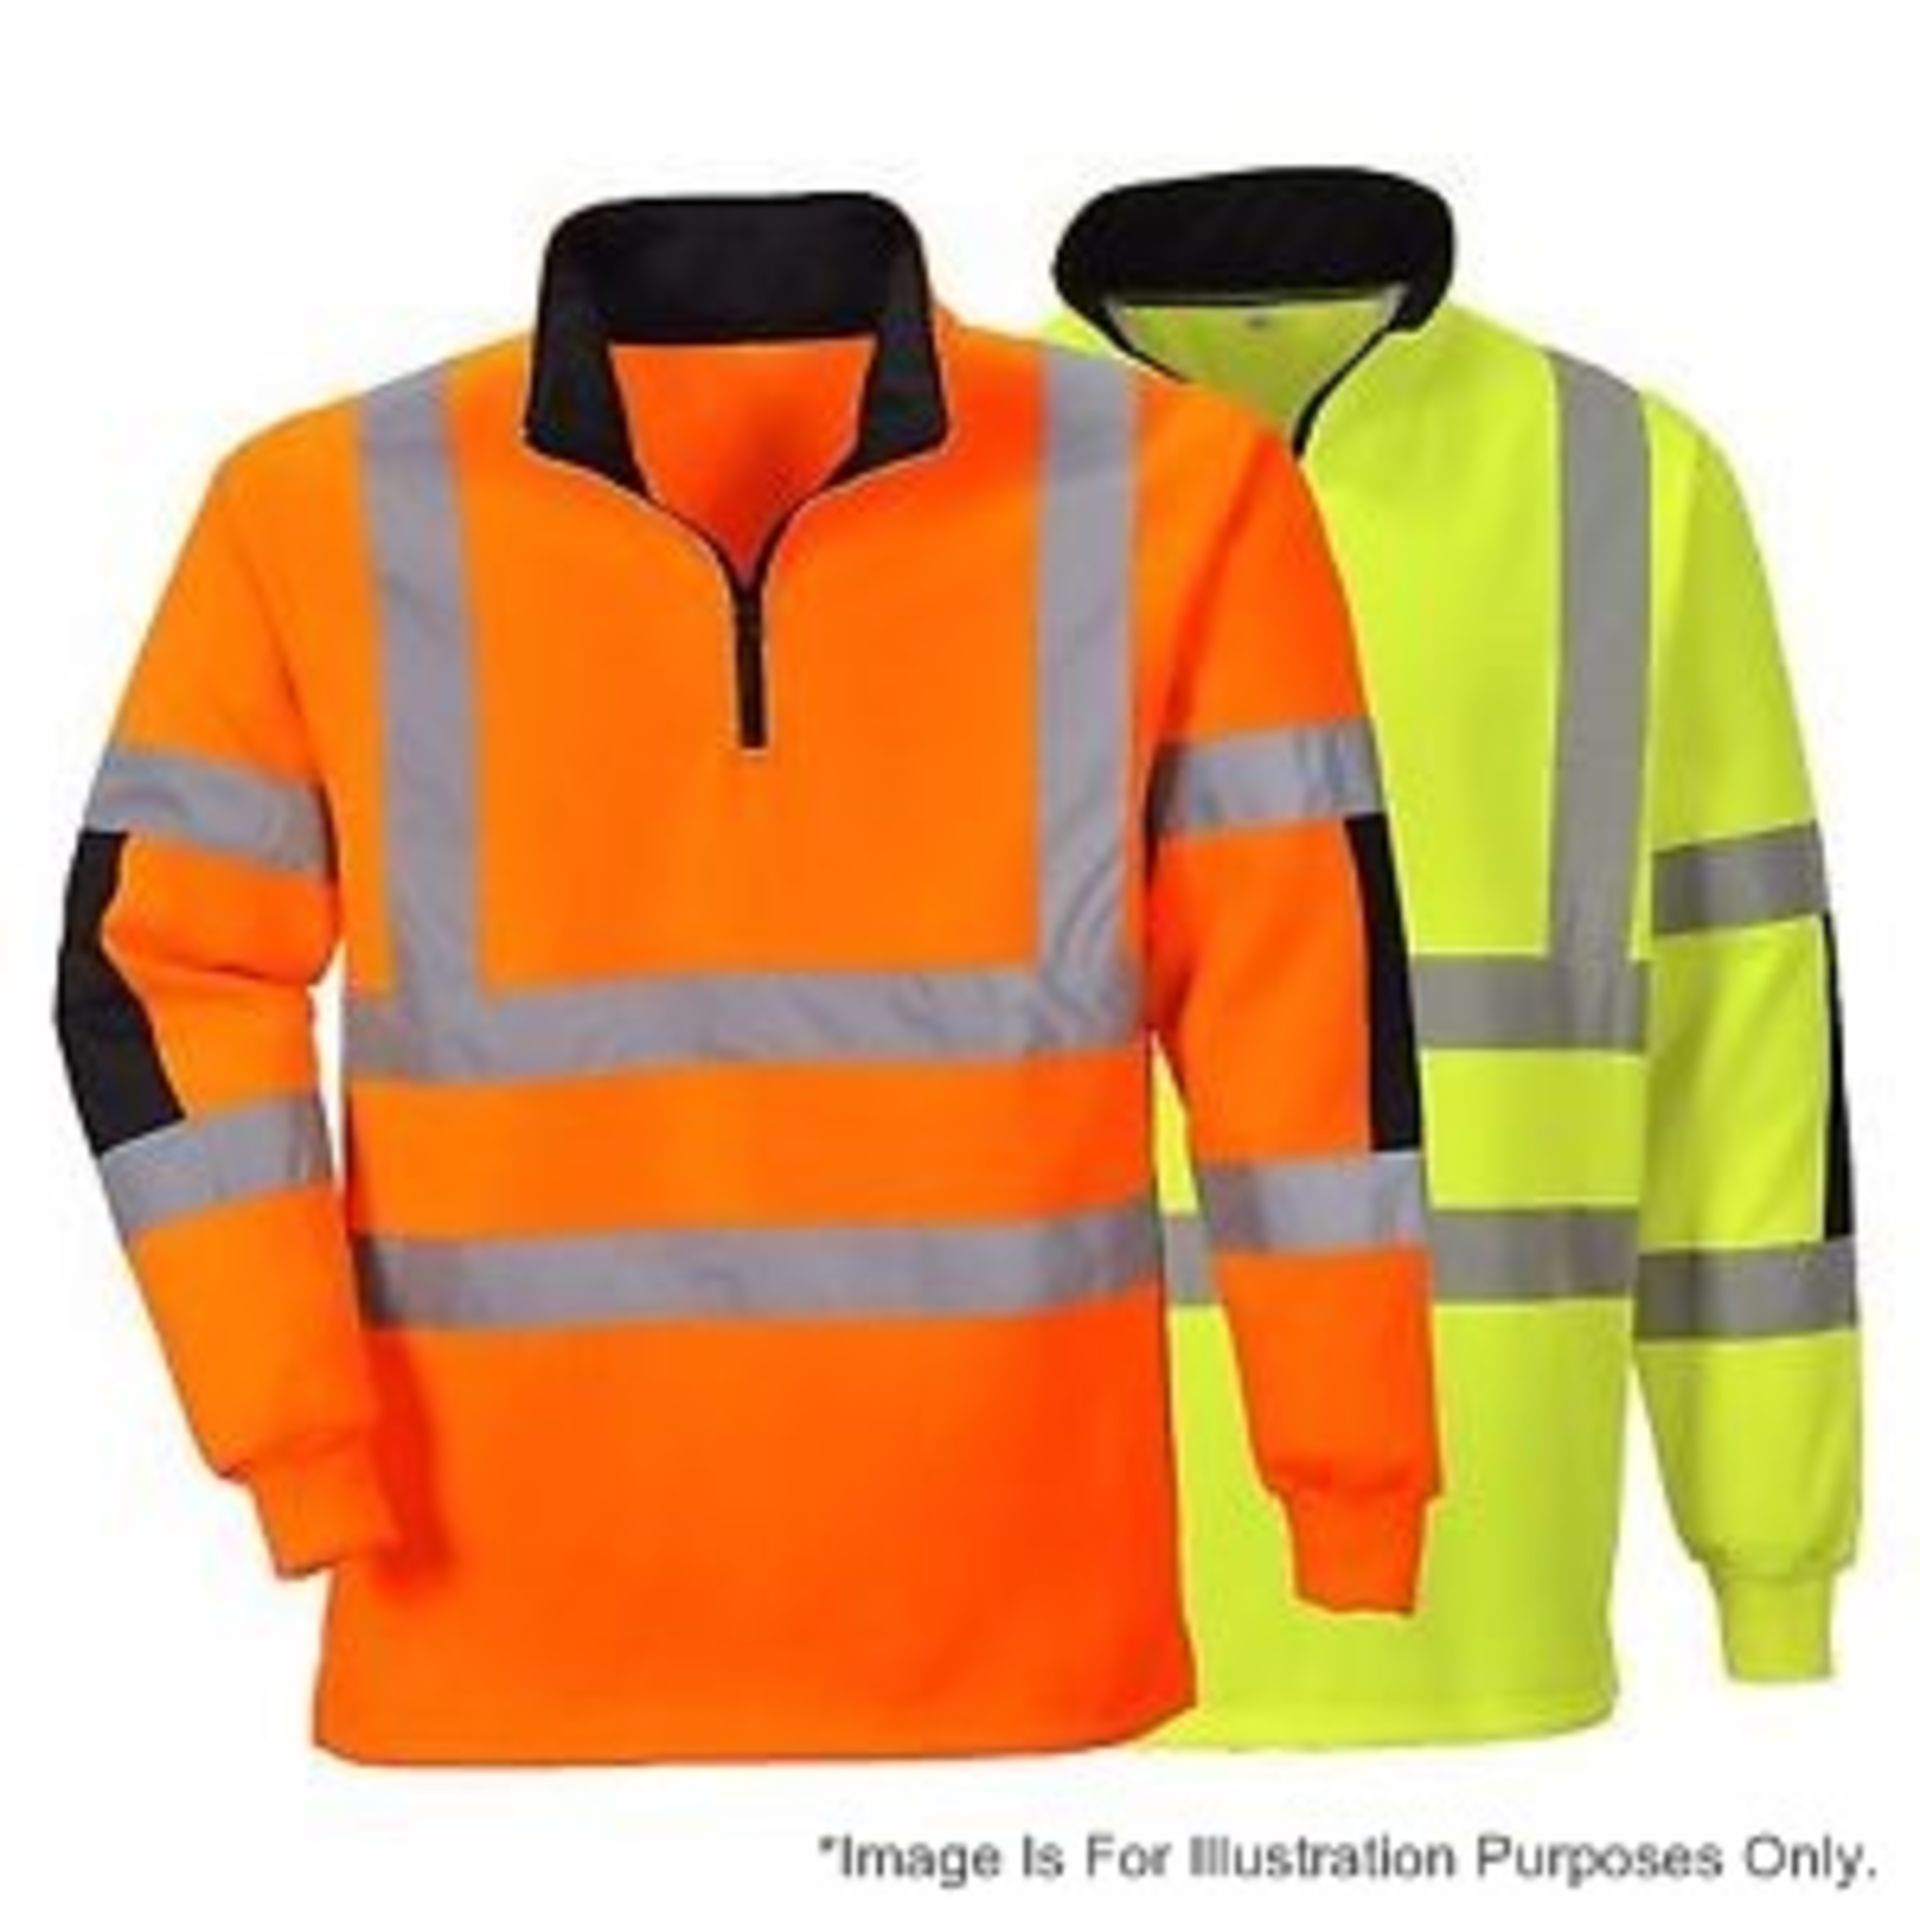 2 x Portwest Xenon Rugby Shirt Sweatshirt Workwear Hi Vis Visibility (B308) - Colour: Yellow /